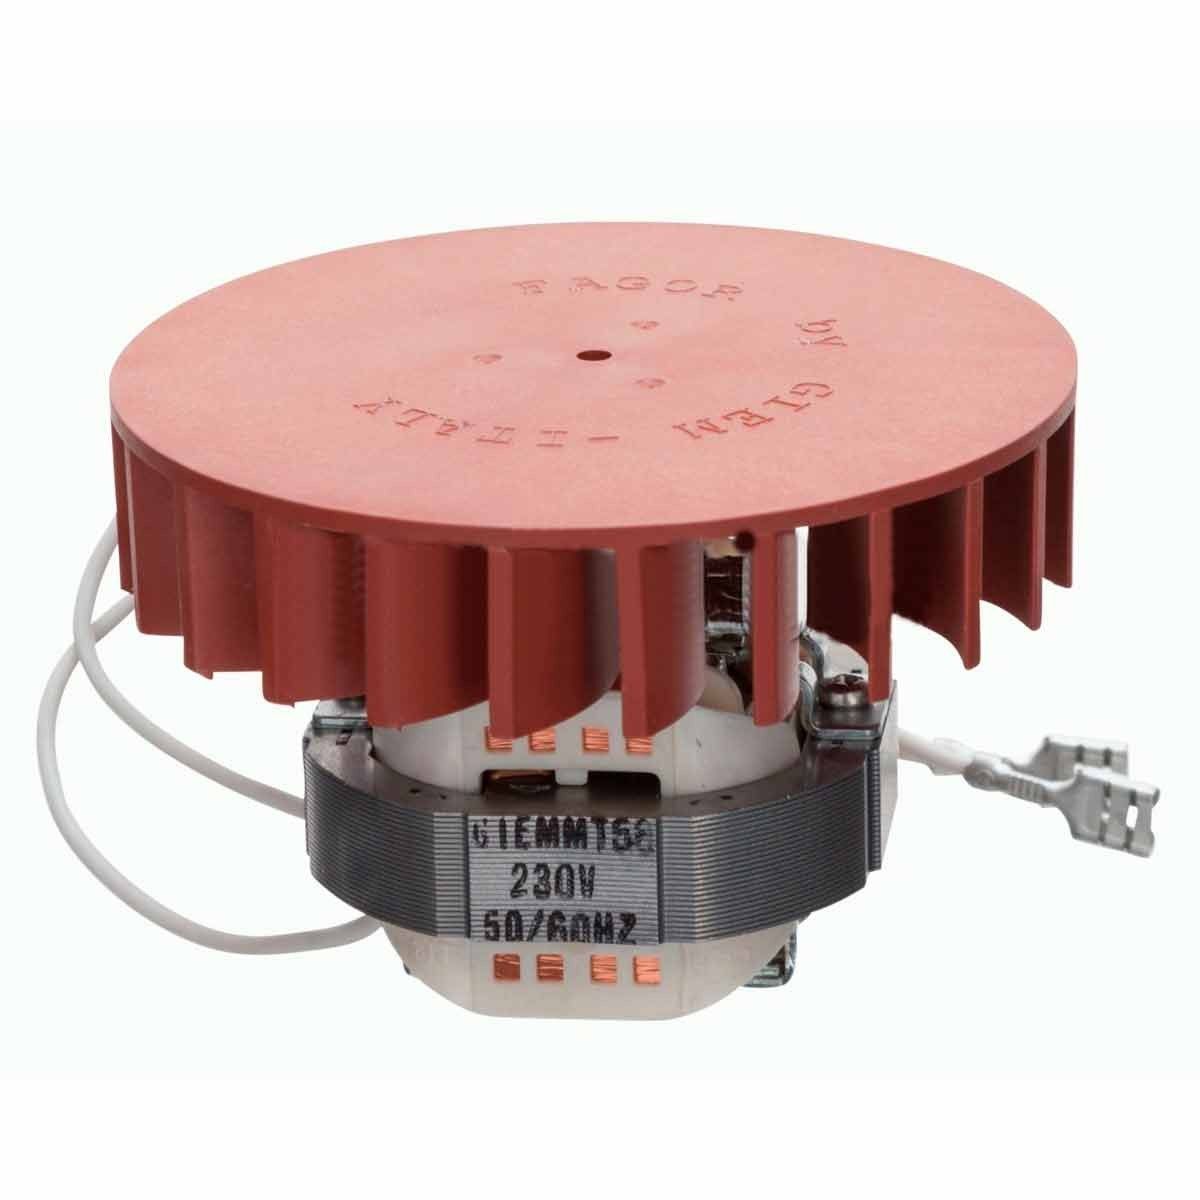 Cooling Fan for Fagor Brandt Ovens - CH8D002A6 Fagor / Brandt